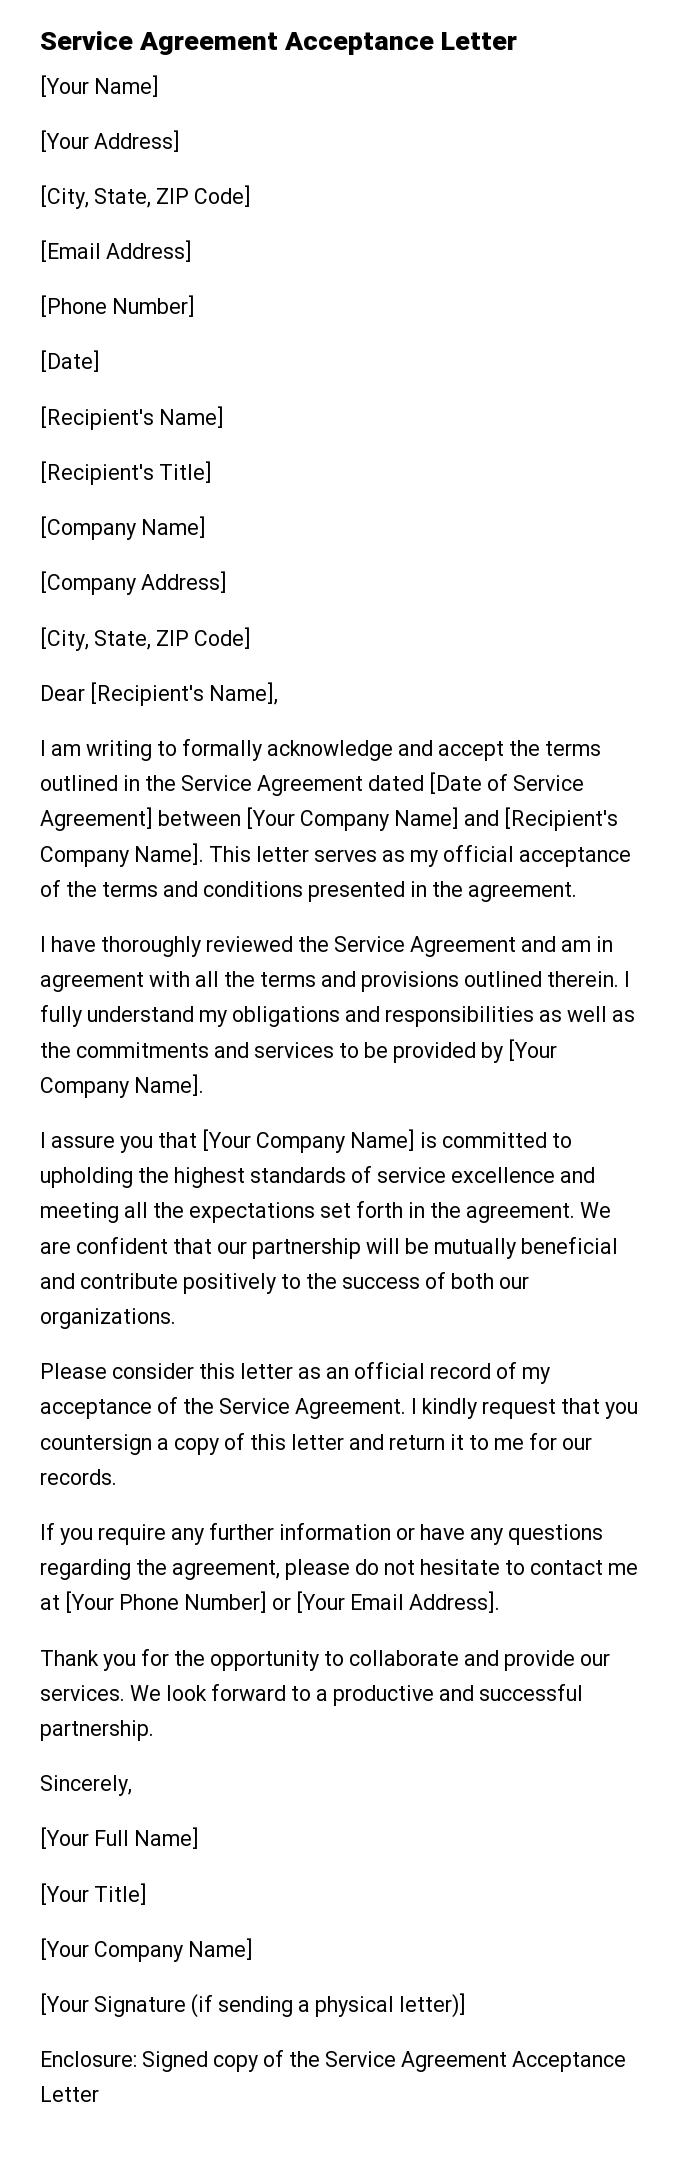 Service Agreement Acceptance Letter